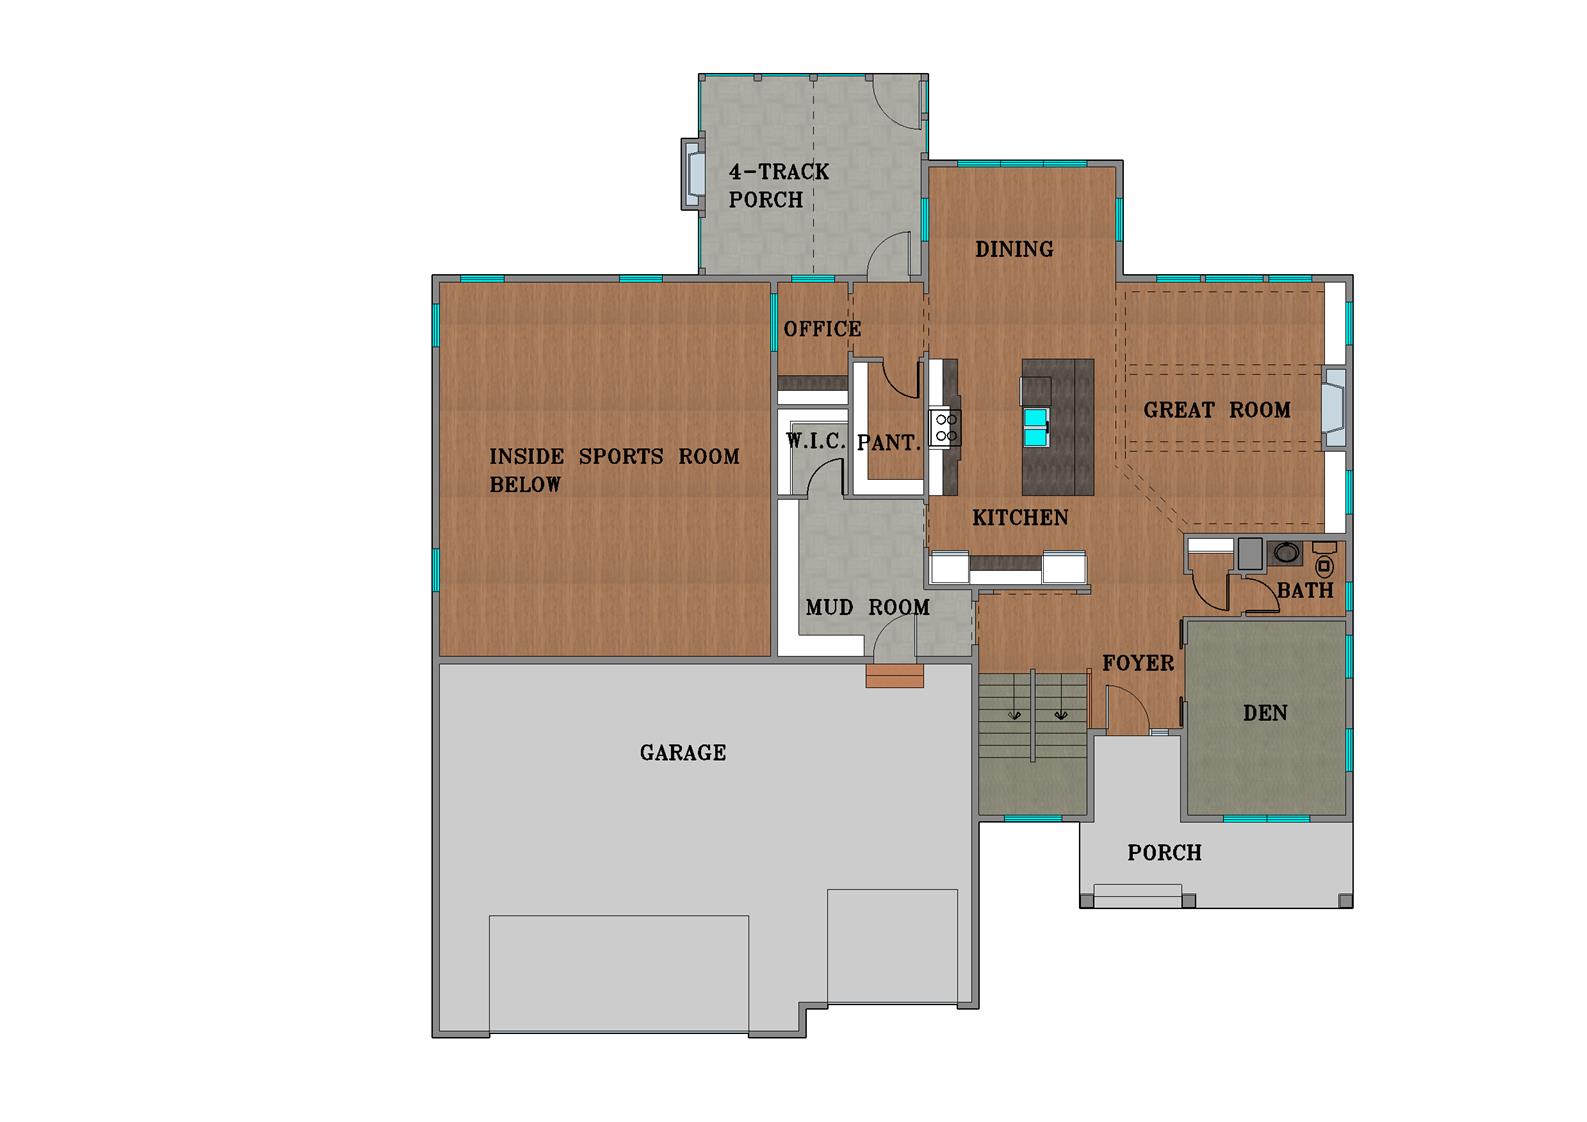 Home Plan Main Floor Plan Color rendering